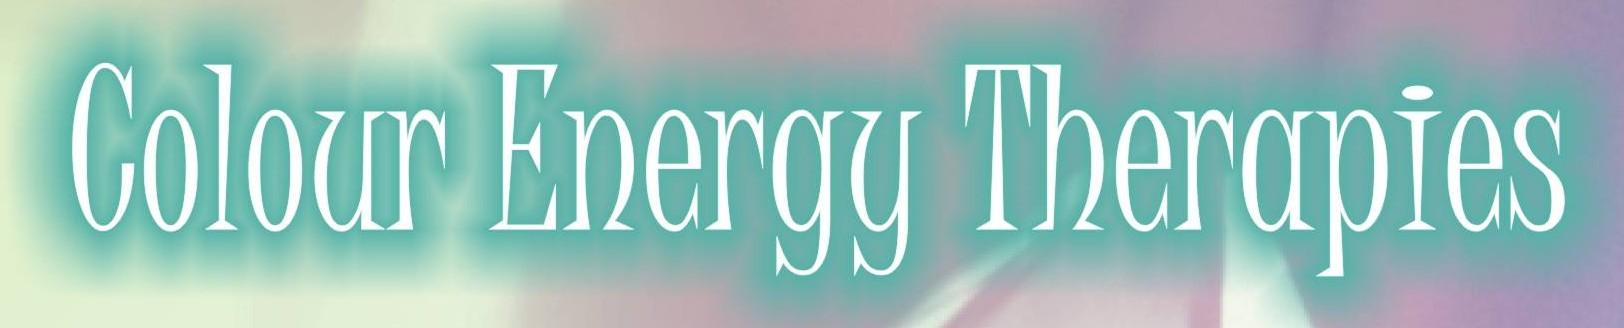 Agnes T McCluskey - Colour Energy Therapies logo